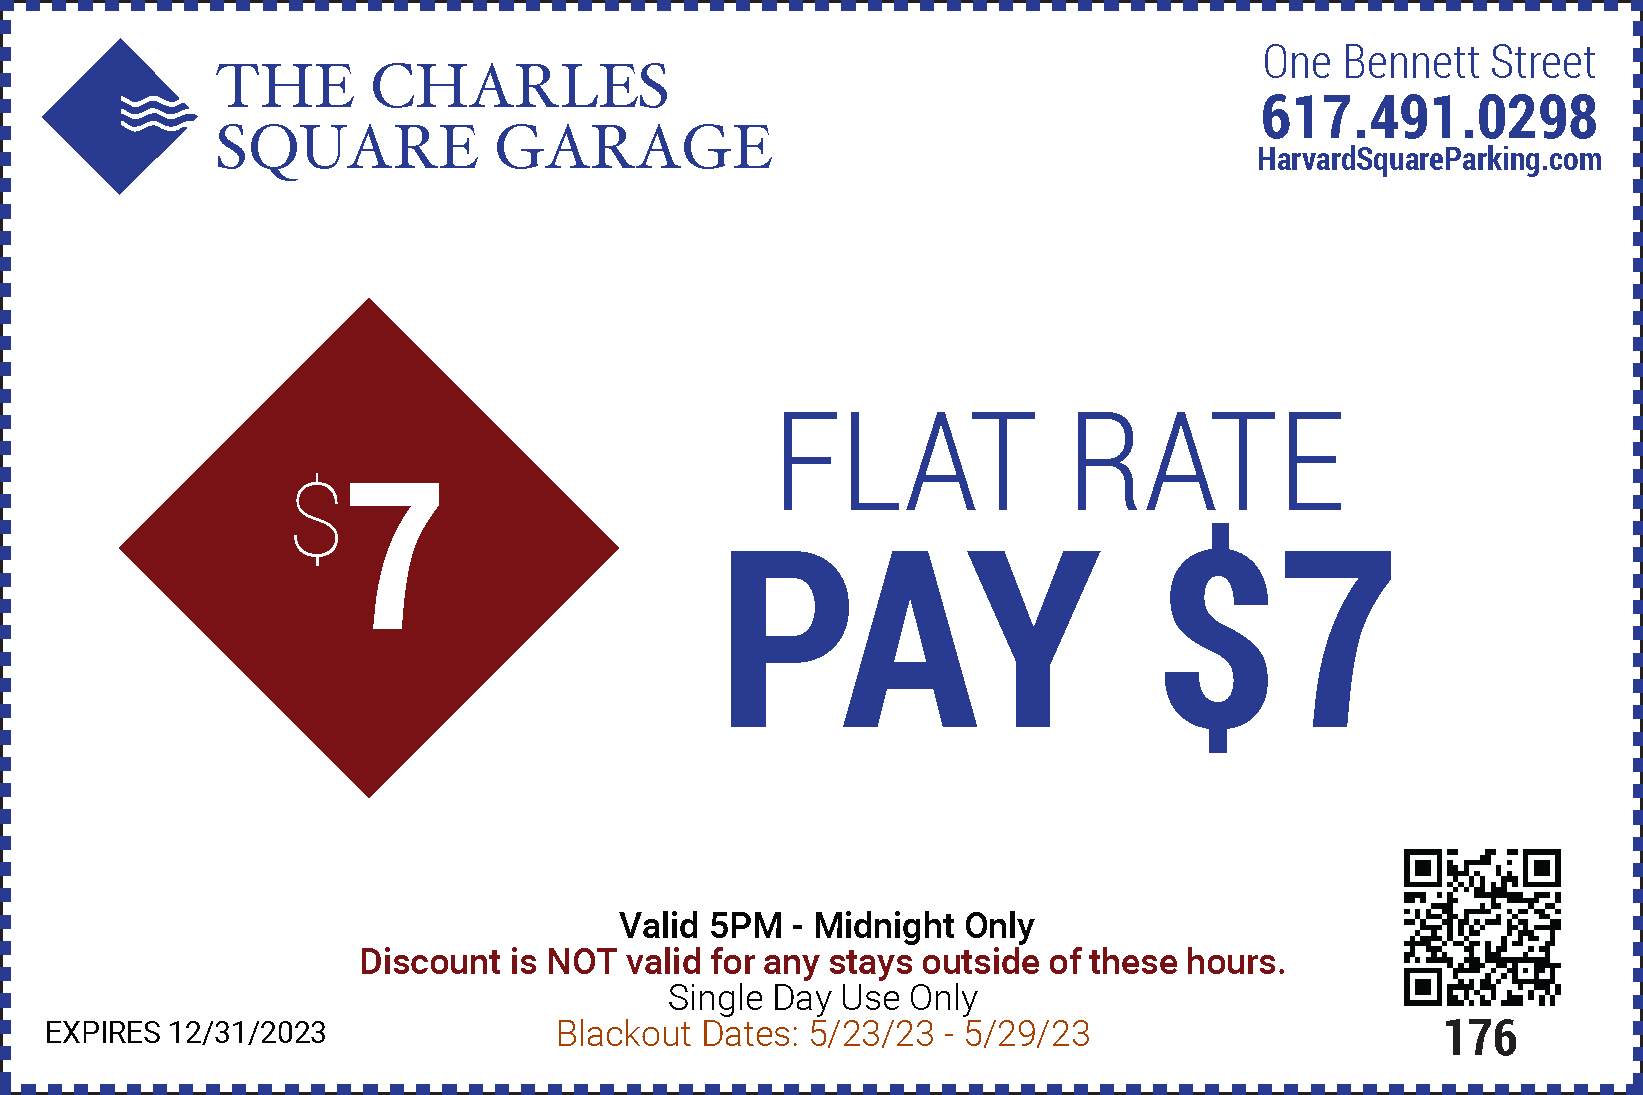 $7 flat rate